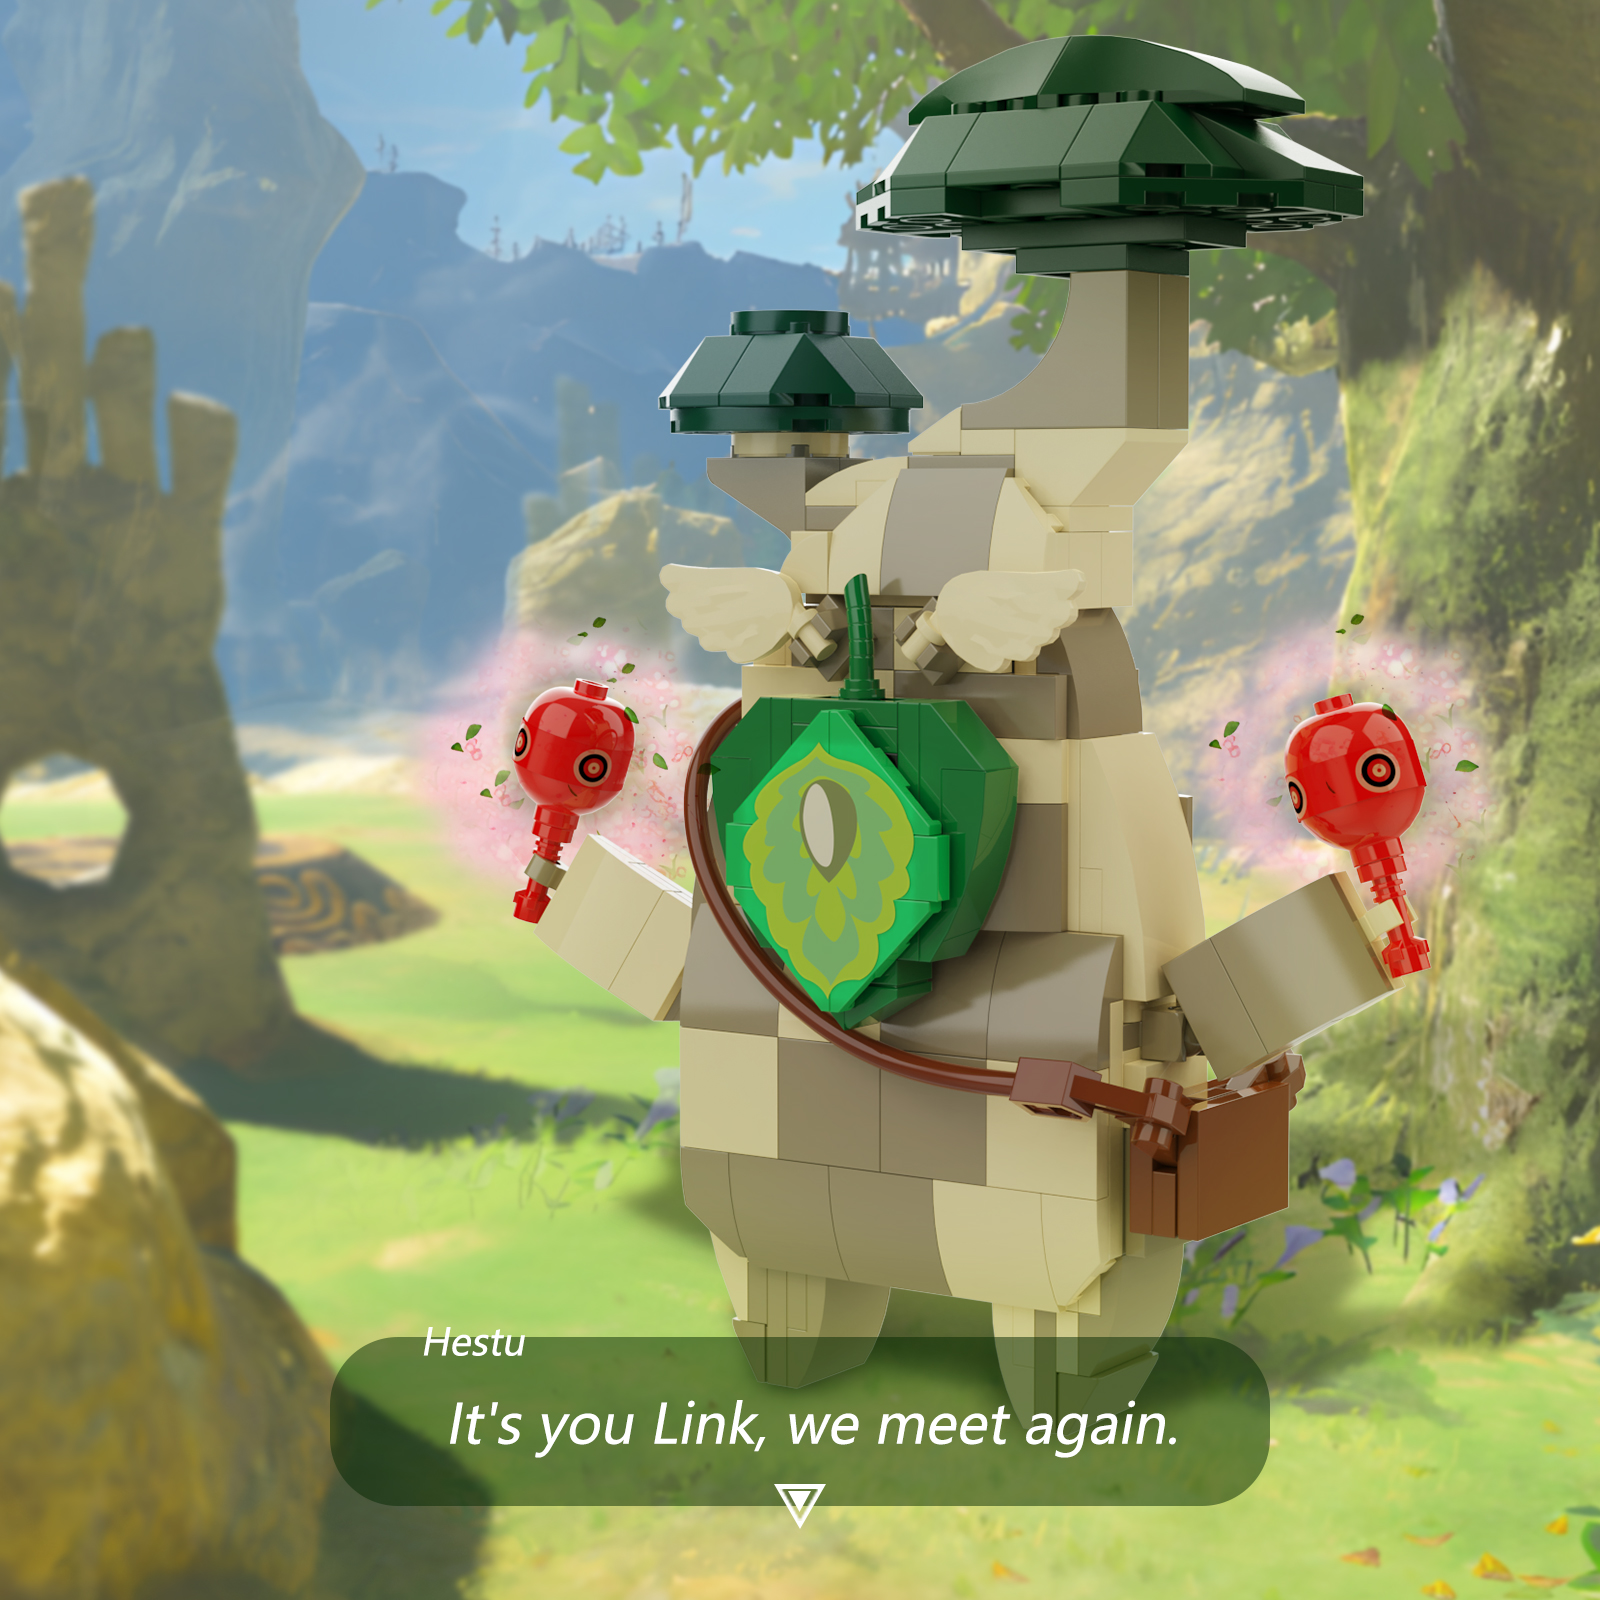 BuildMoc BOTW Korok Yahaha King Building Blocks Set Cute Game Merch Action Character Bricks Toys For 2 - Zelda Plush